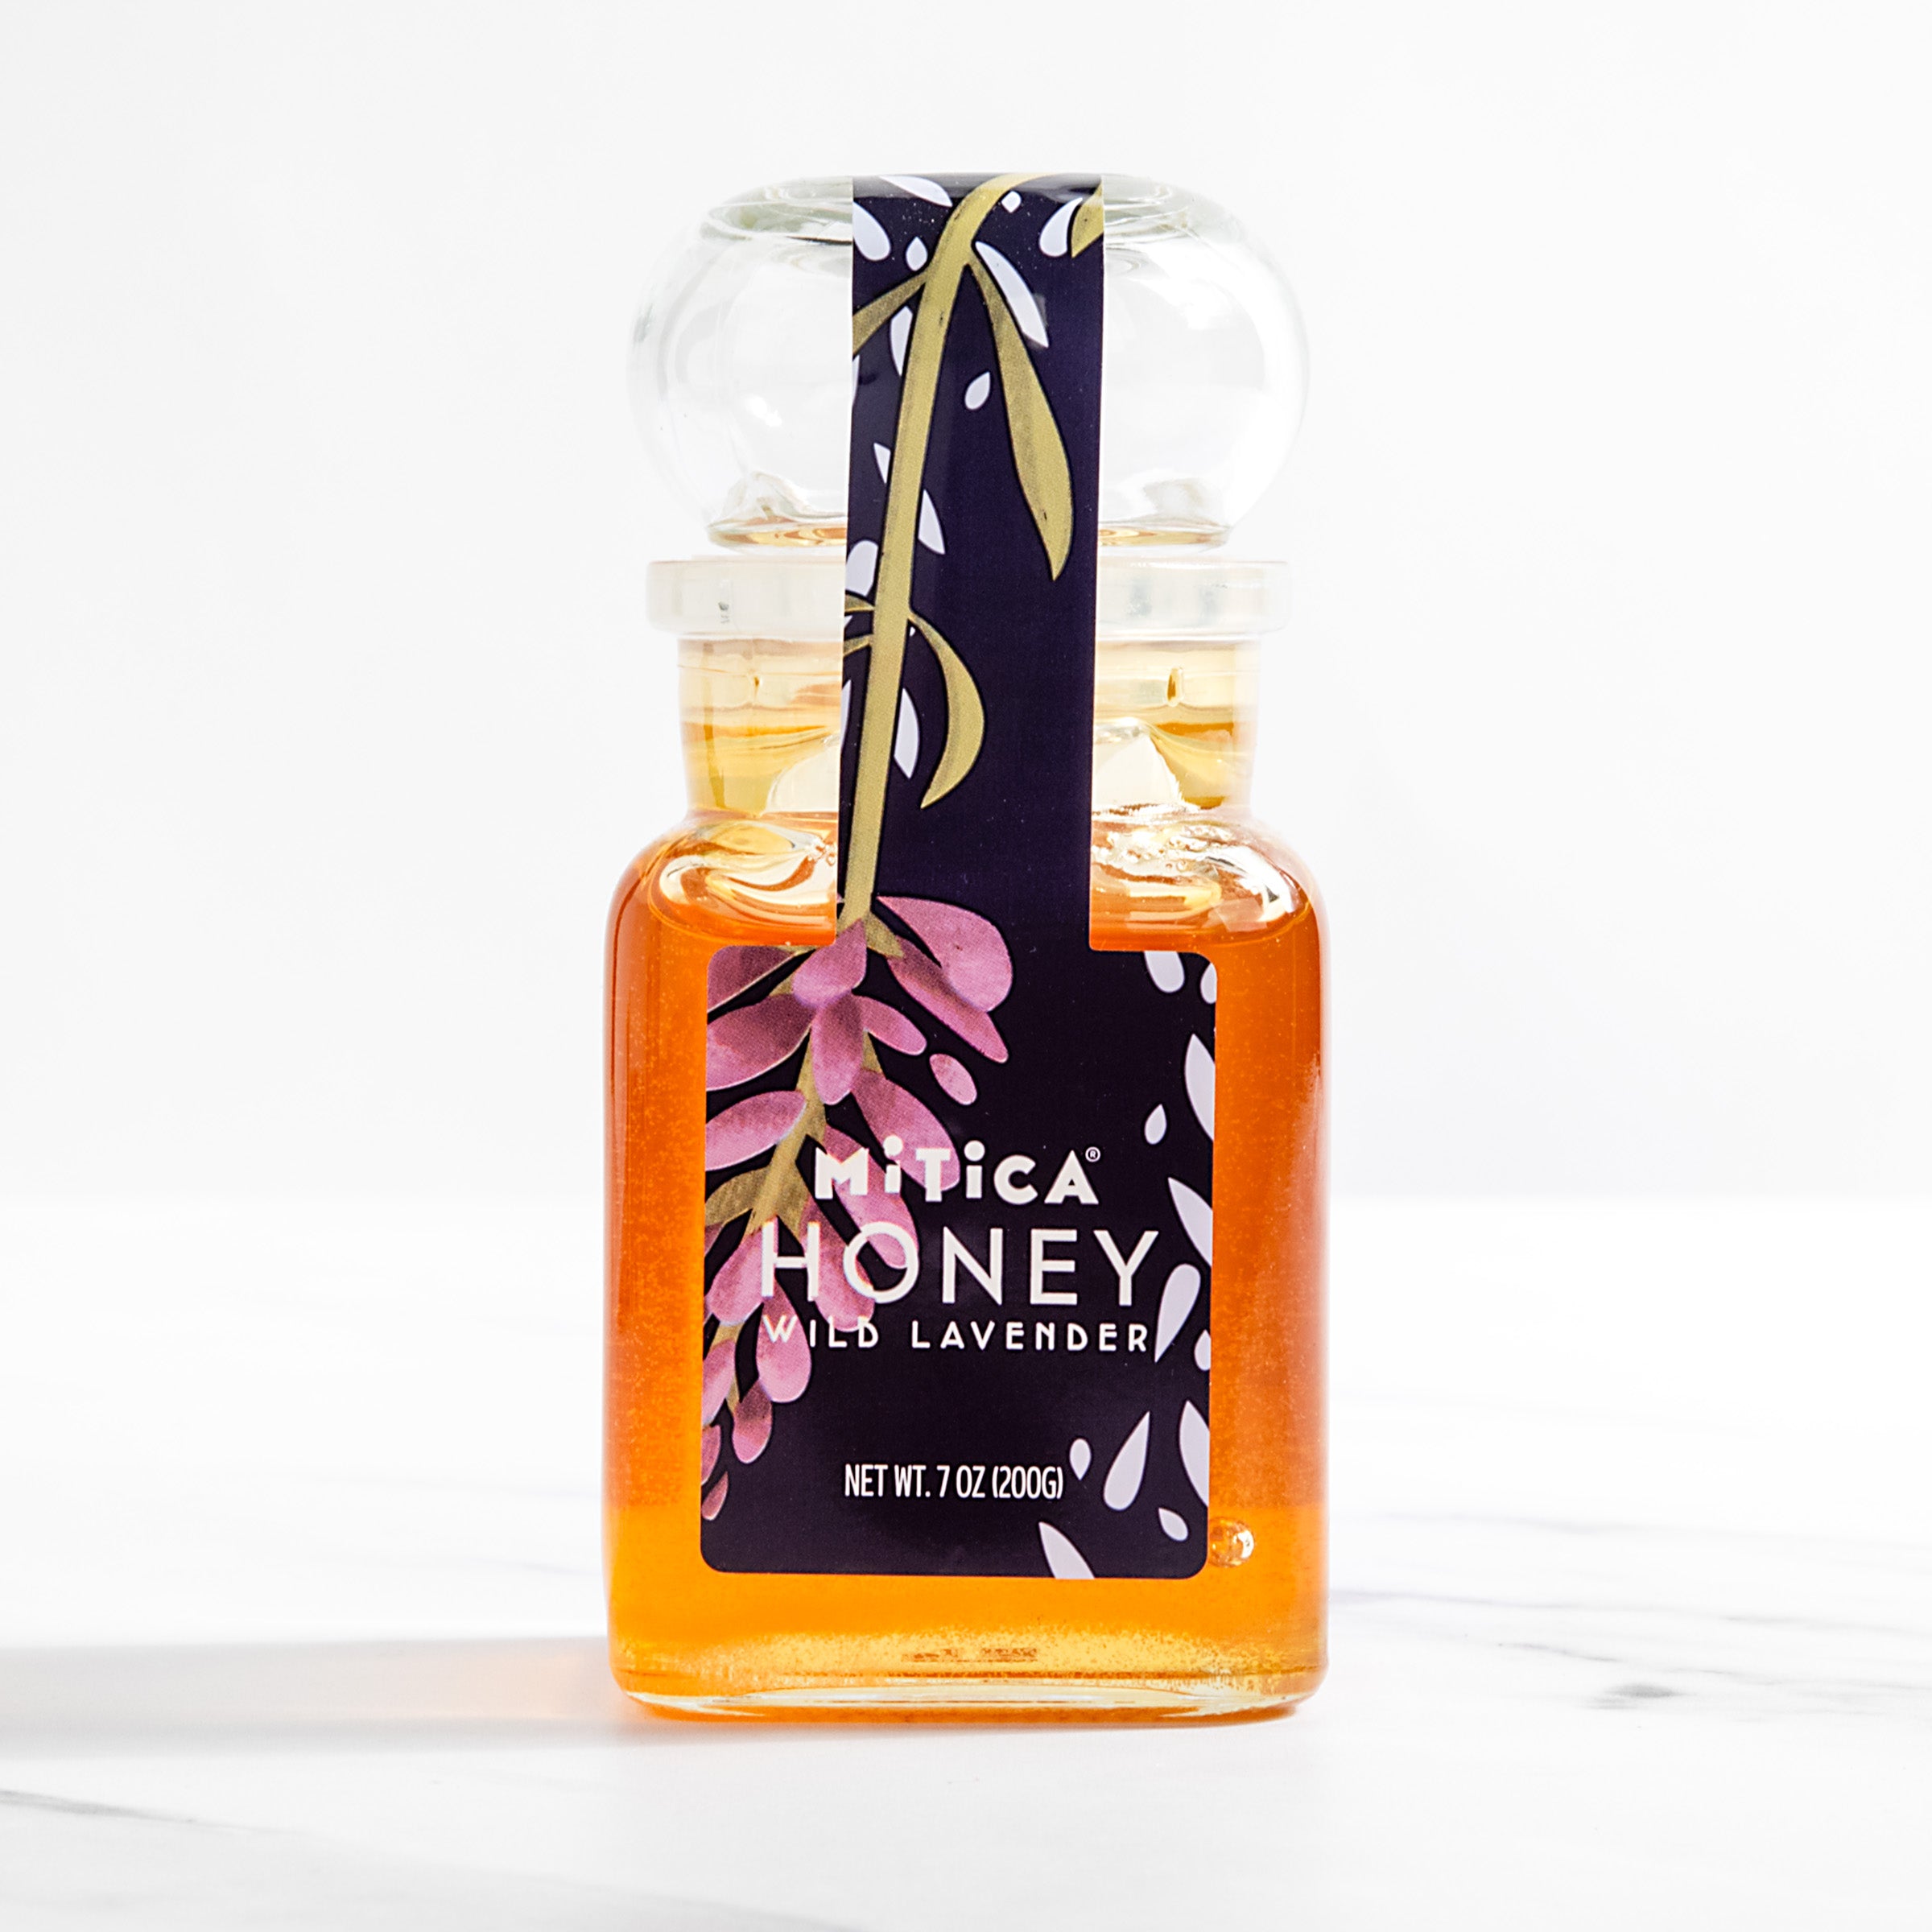 igourmet_9830_Spanish Wild Lavender Honey_Mitica_Honey & Maple Syrup